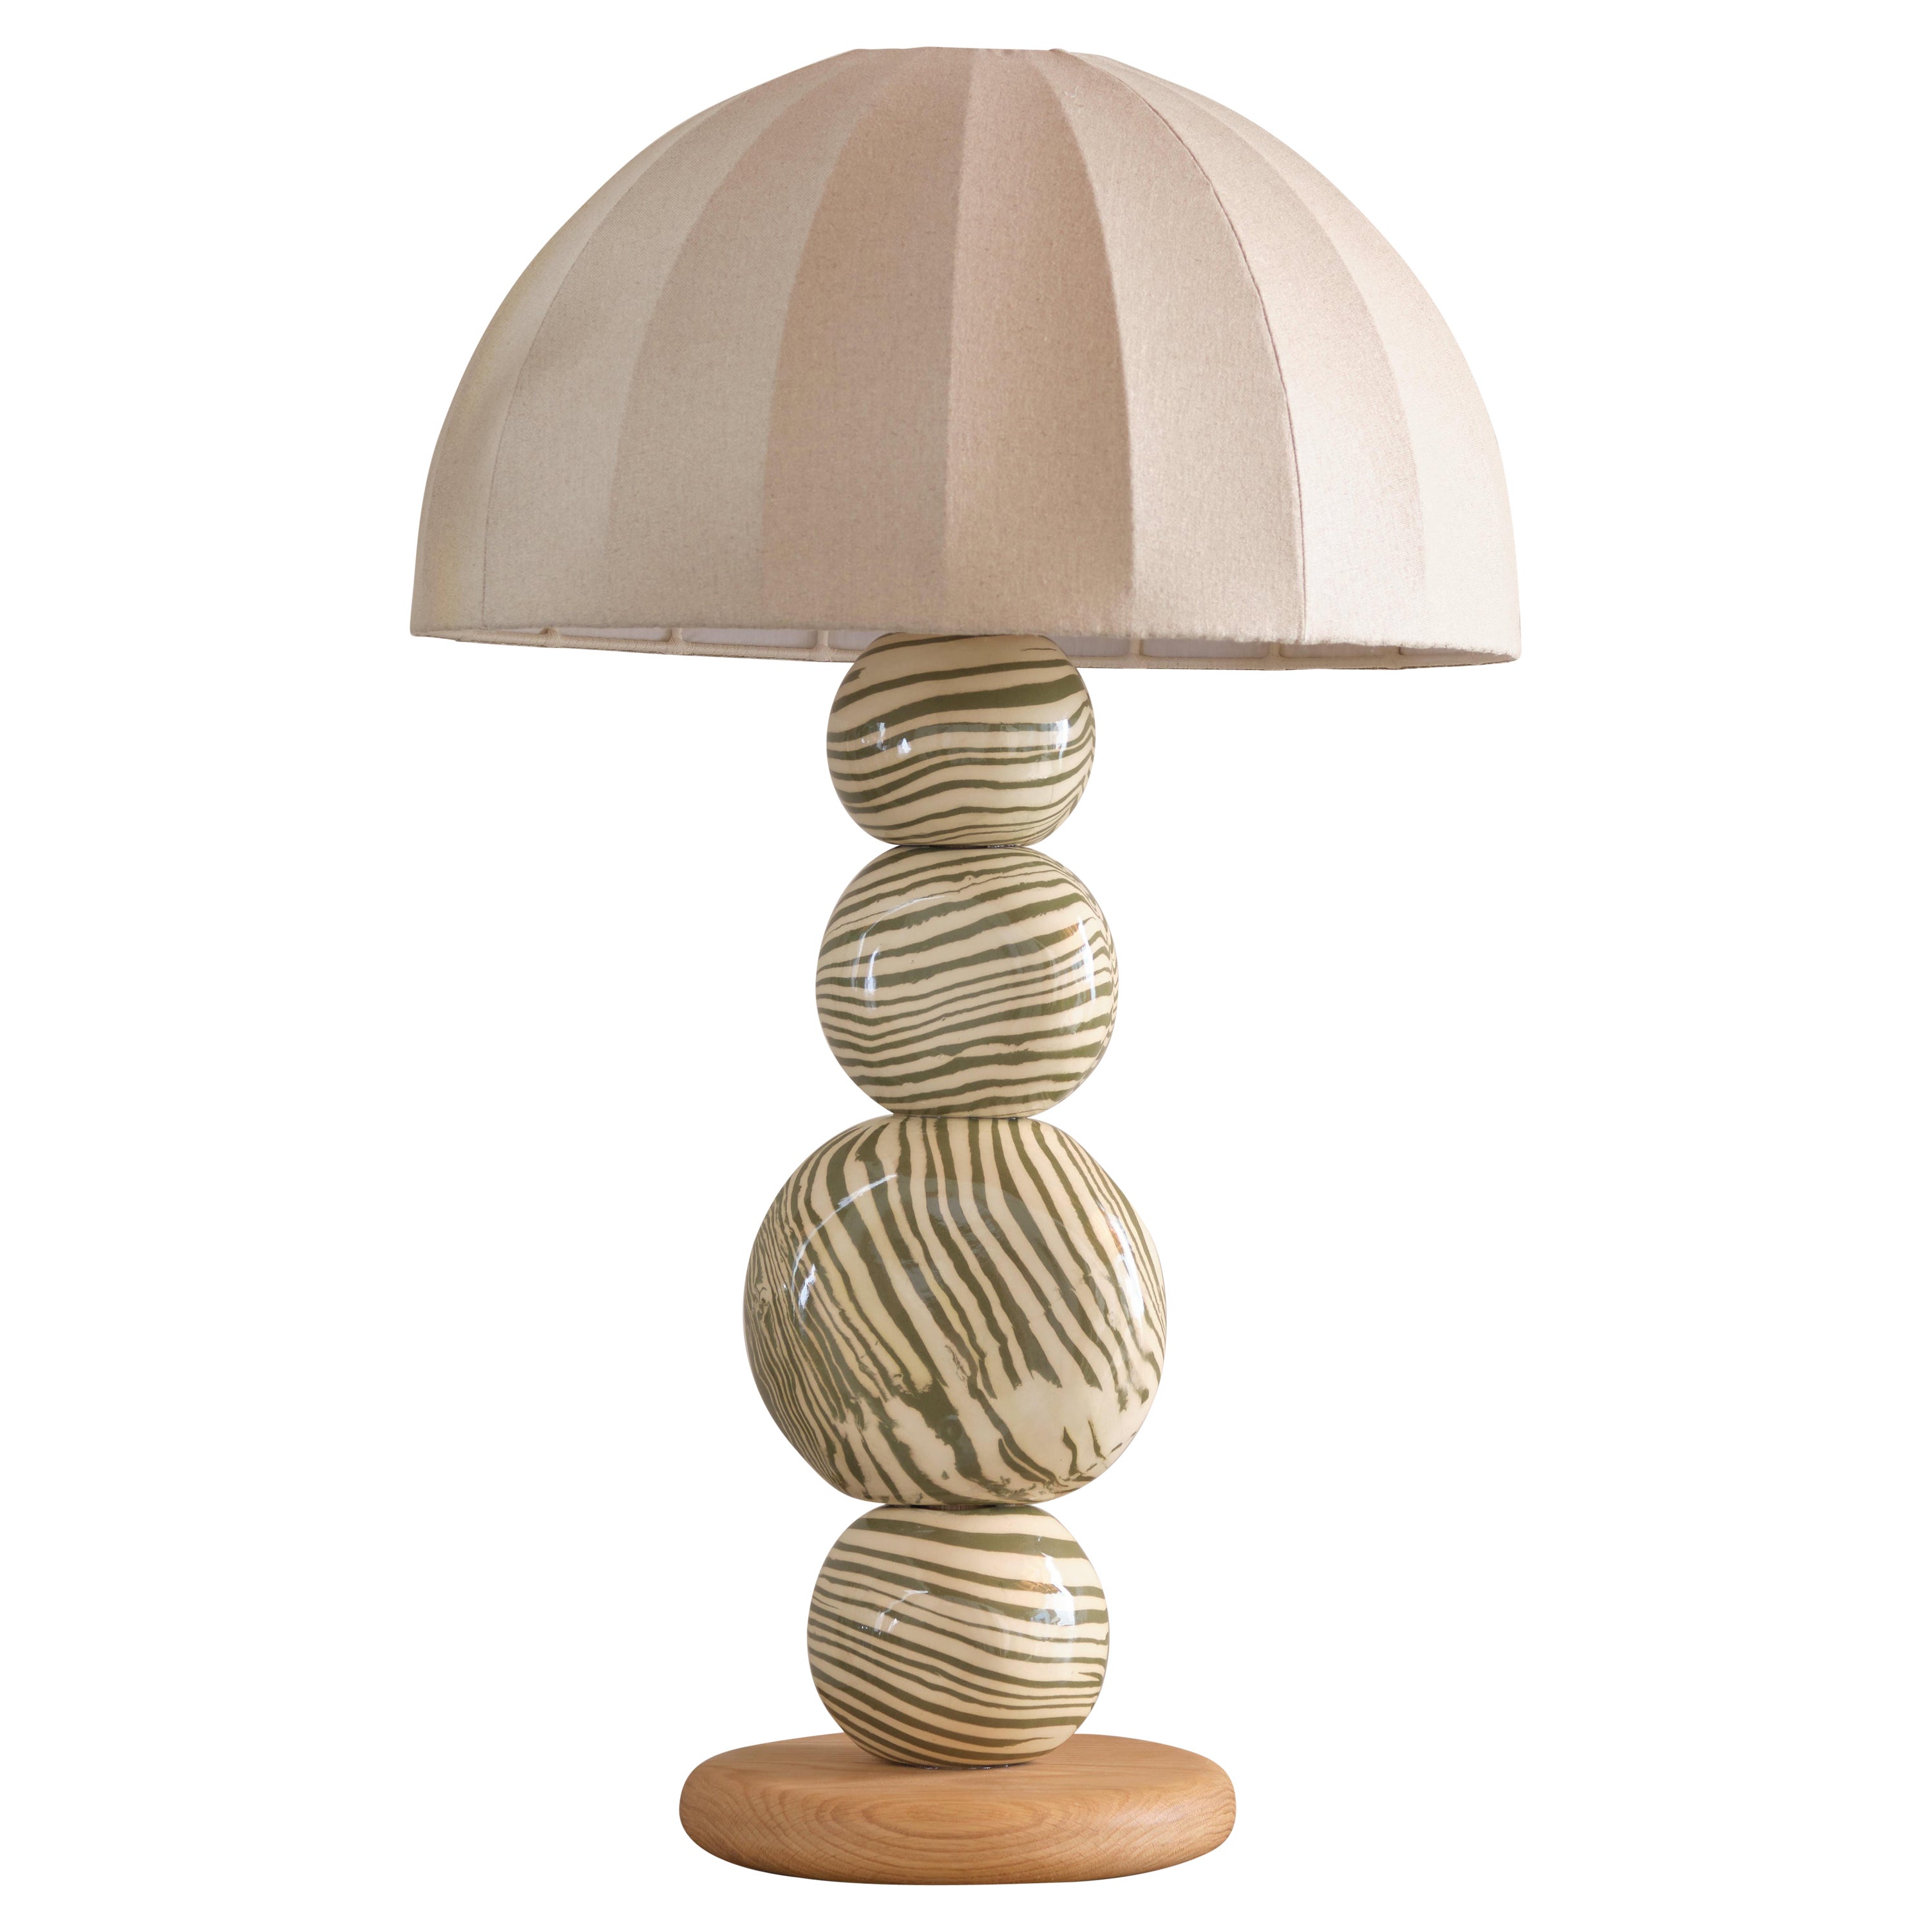 Henry Holland Studio Handmade Green and White Ceramic Sphere Table Lamp For Sale